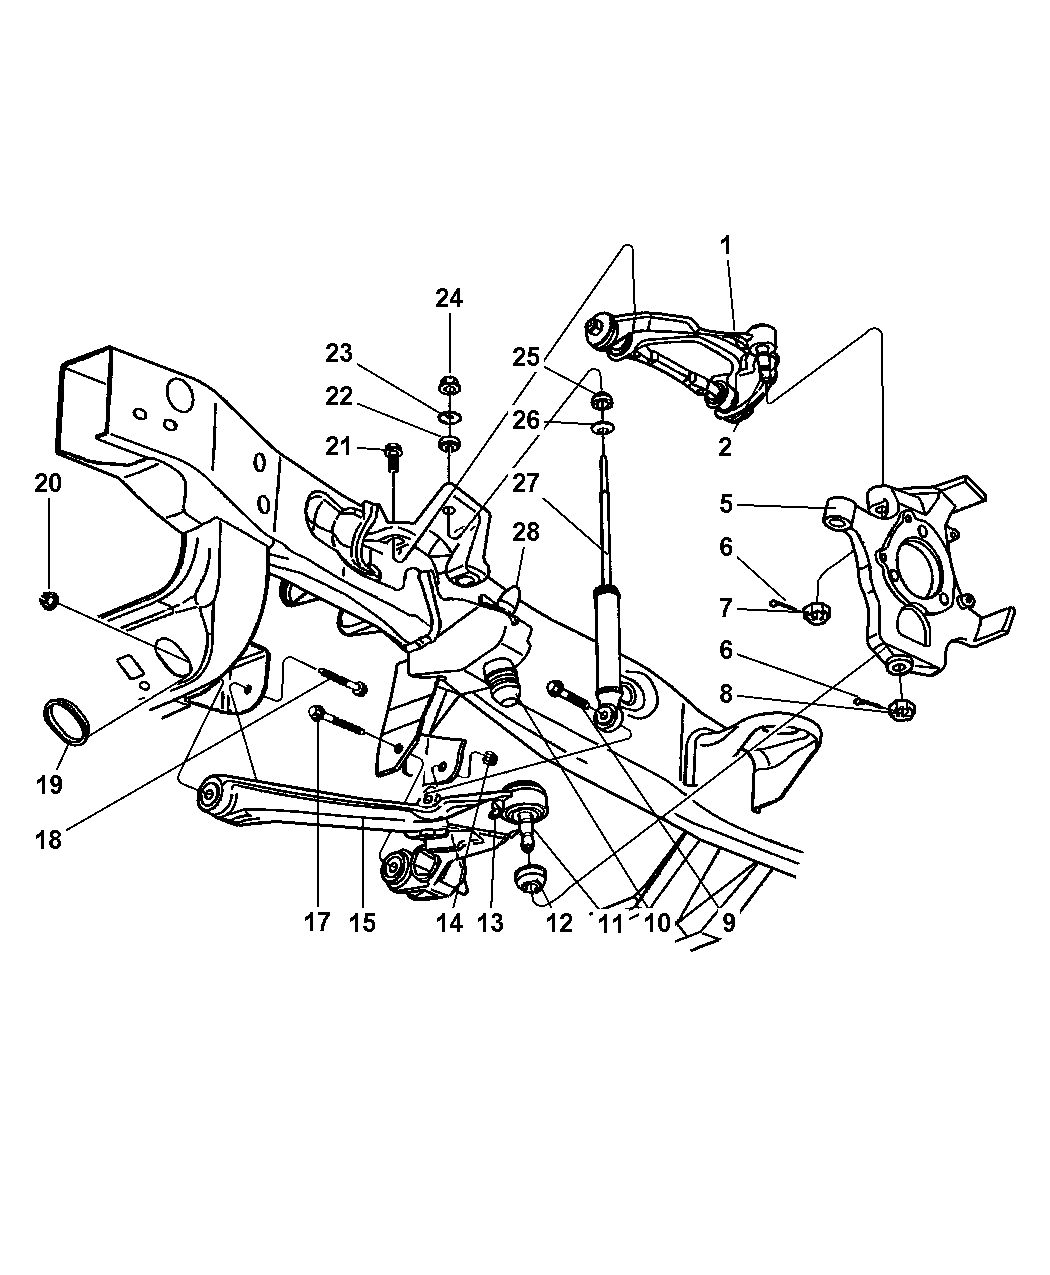 Dodge Dakota Front Suspension Diagram - General Wiring Diagram